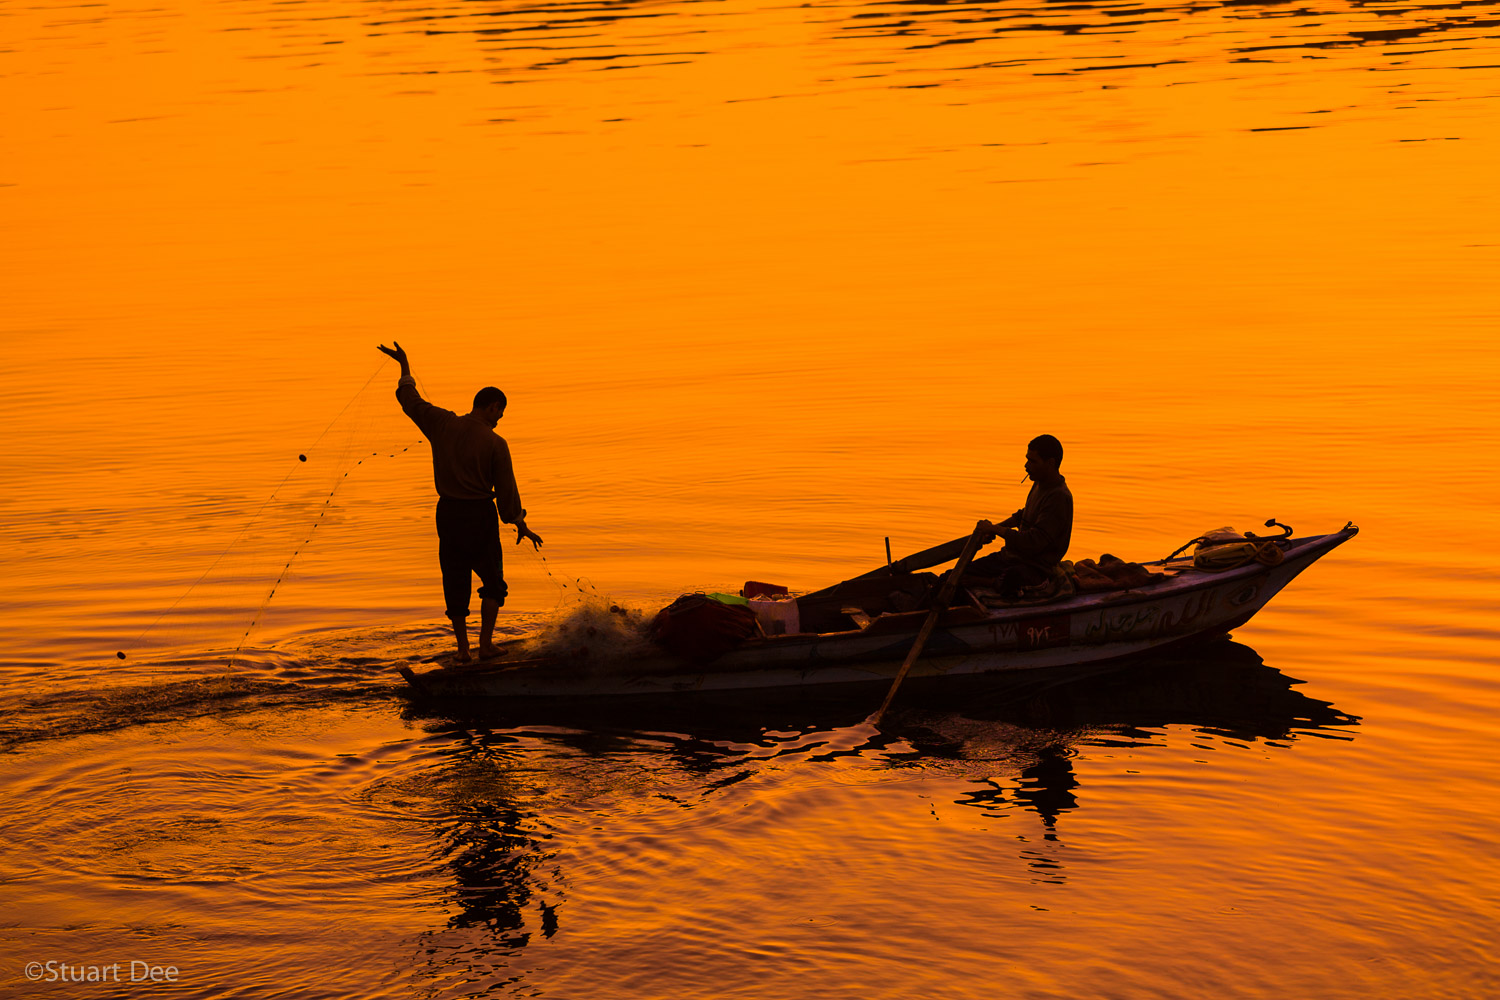  Fishermen on the Nile at sunset, Cairo, Egypt 